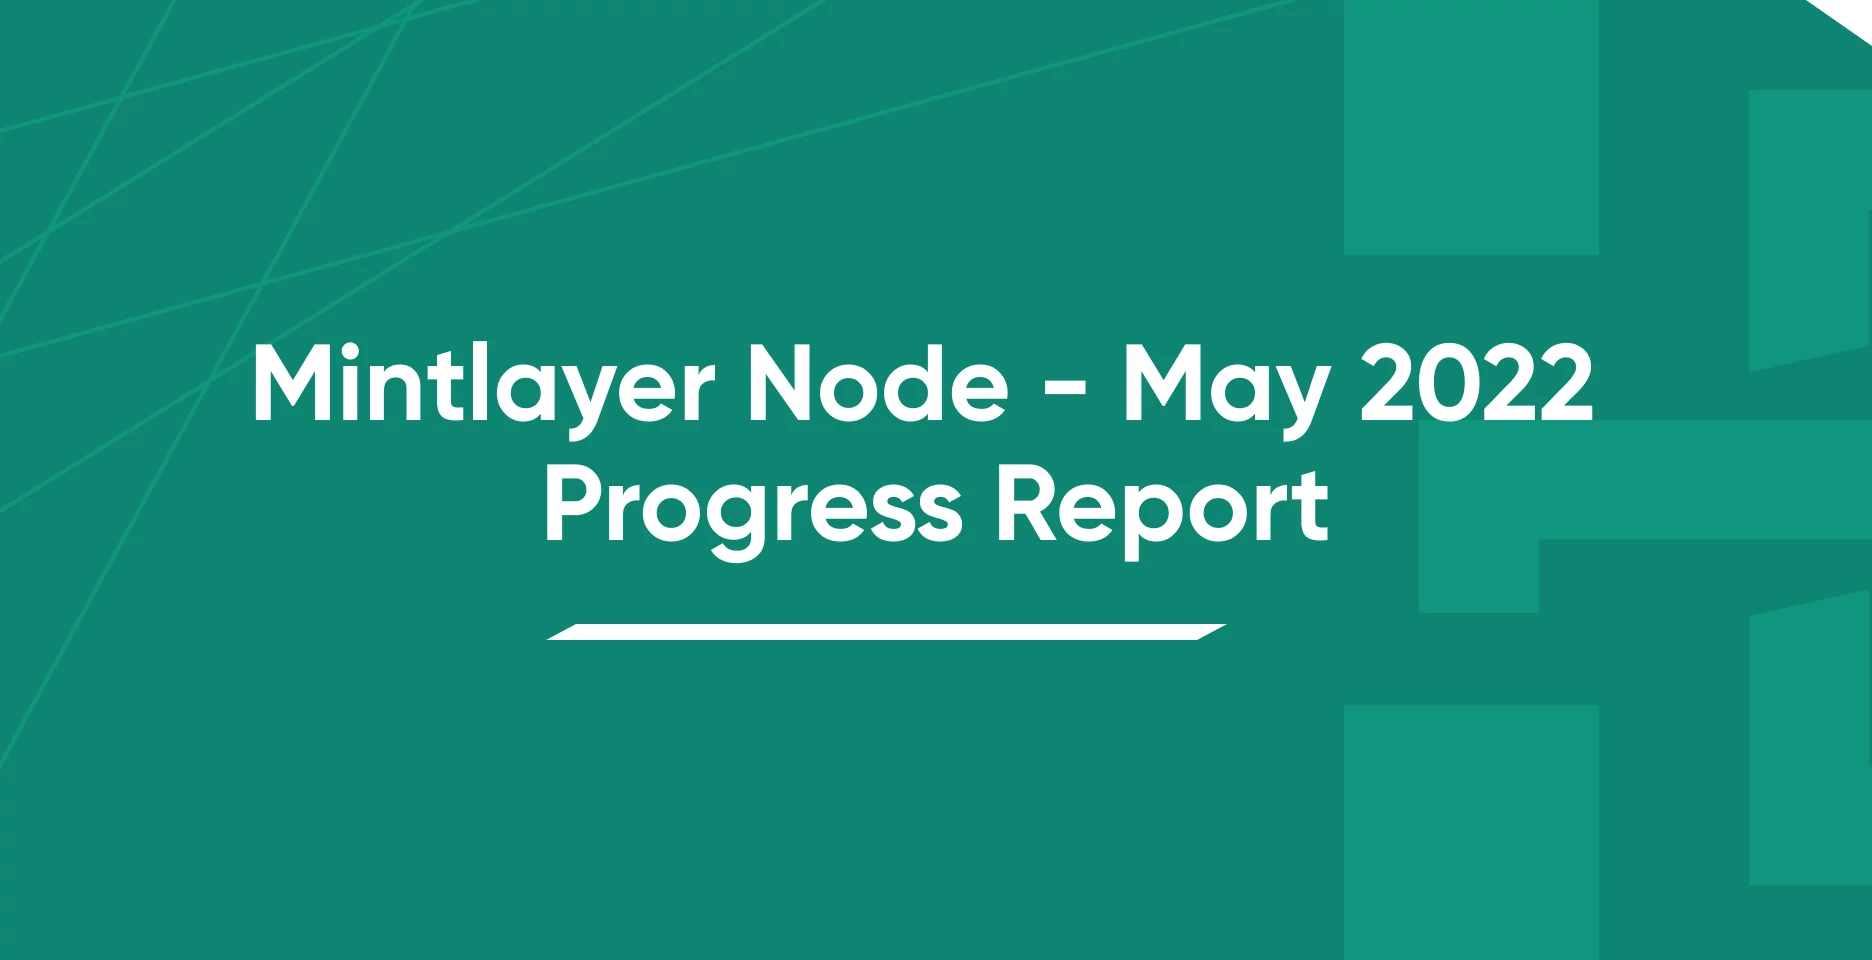 Mintlayer Node - May 2022 Progress Report